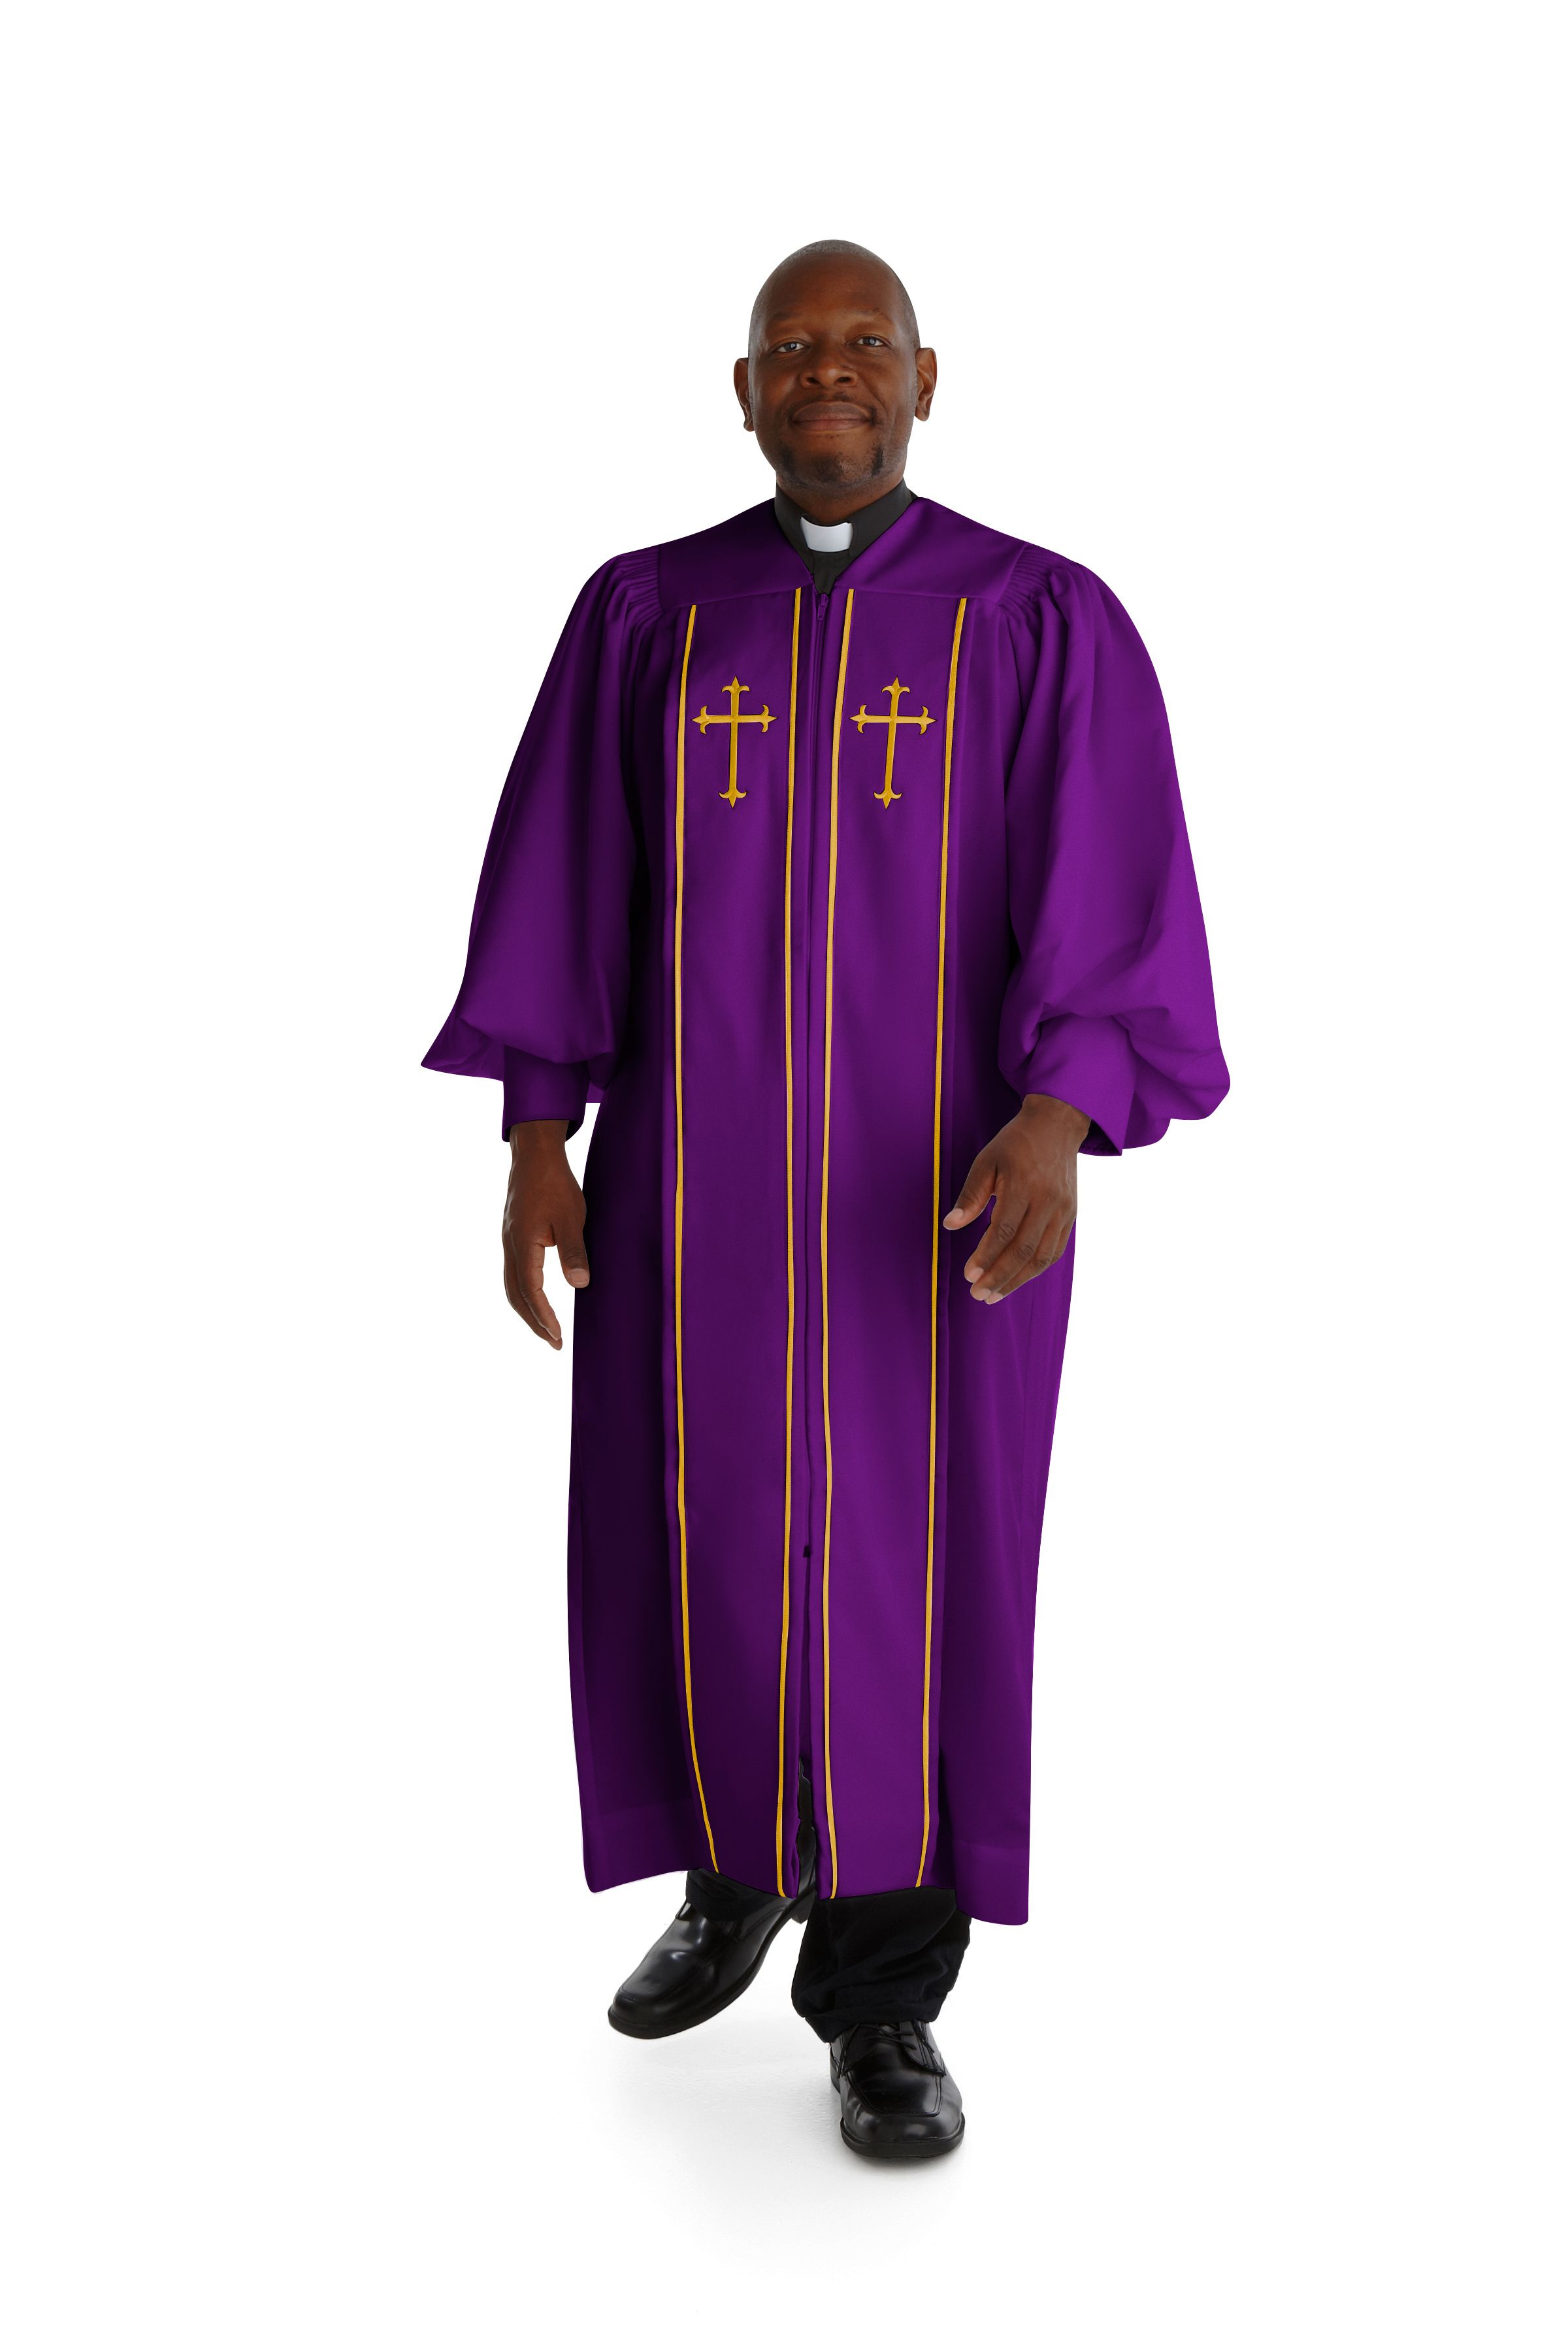 931 P. Men's & Women's Clergy Robe - Purple/Gold